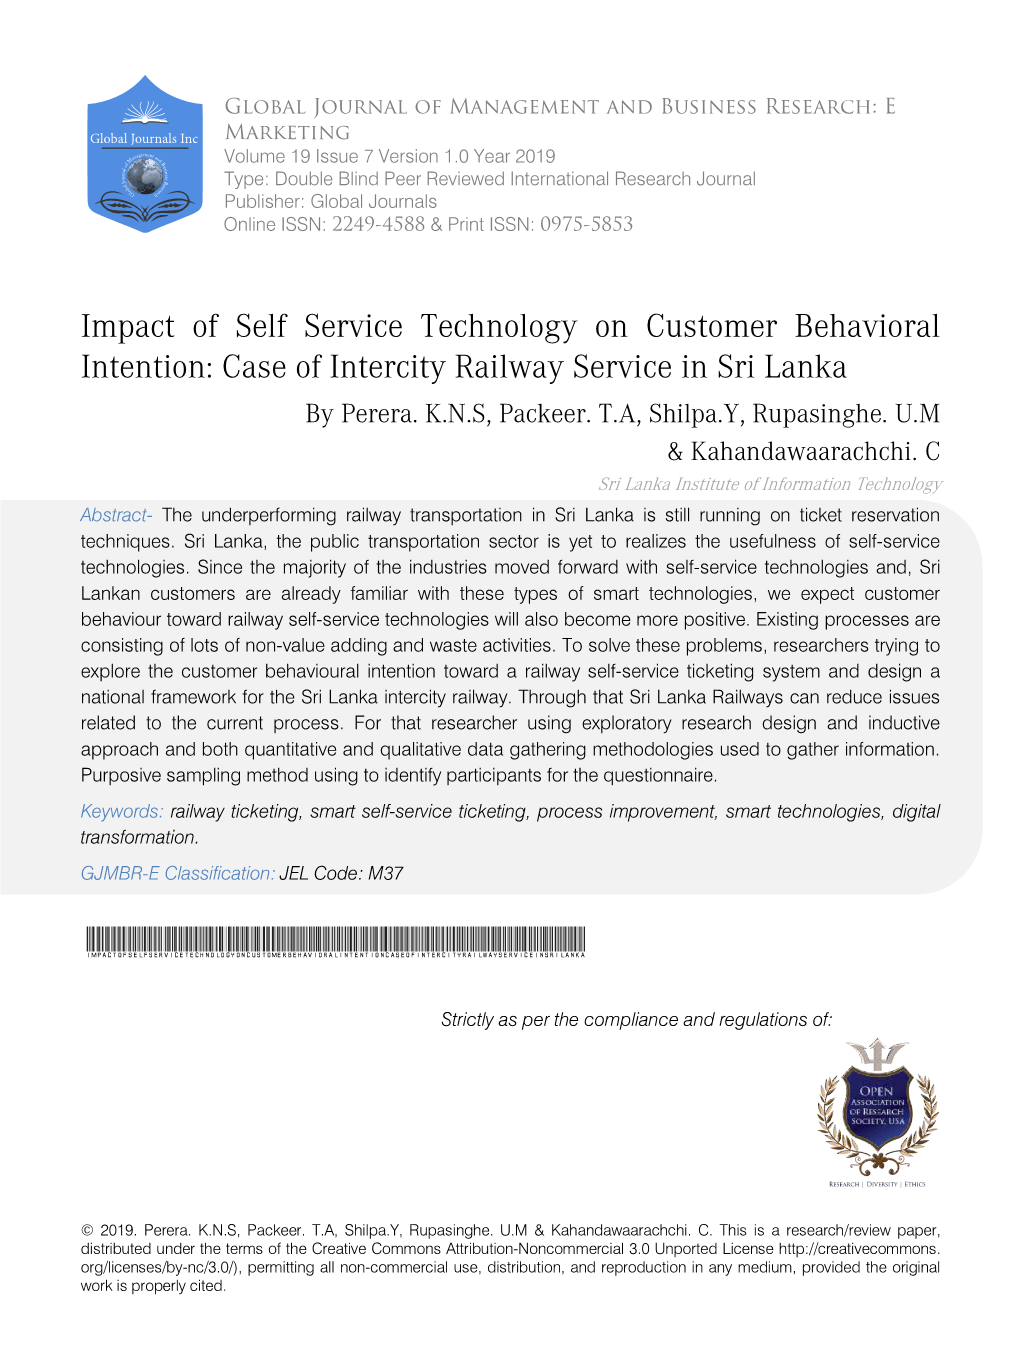 Case of Intercity Railway Service in Sri Lanka by Perera